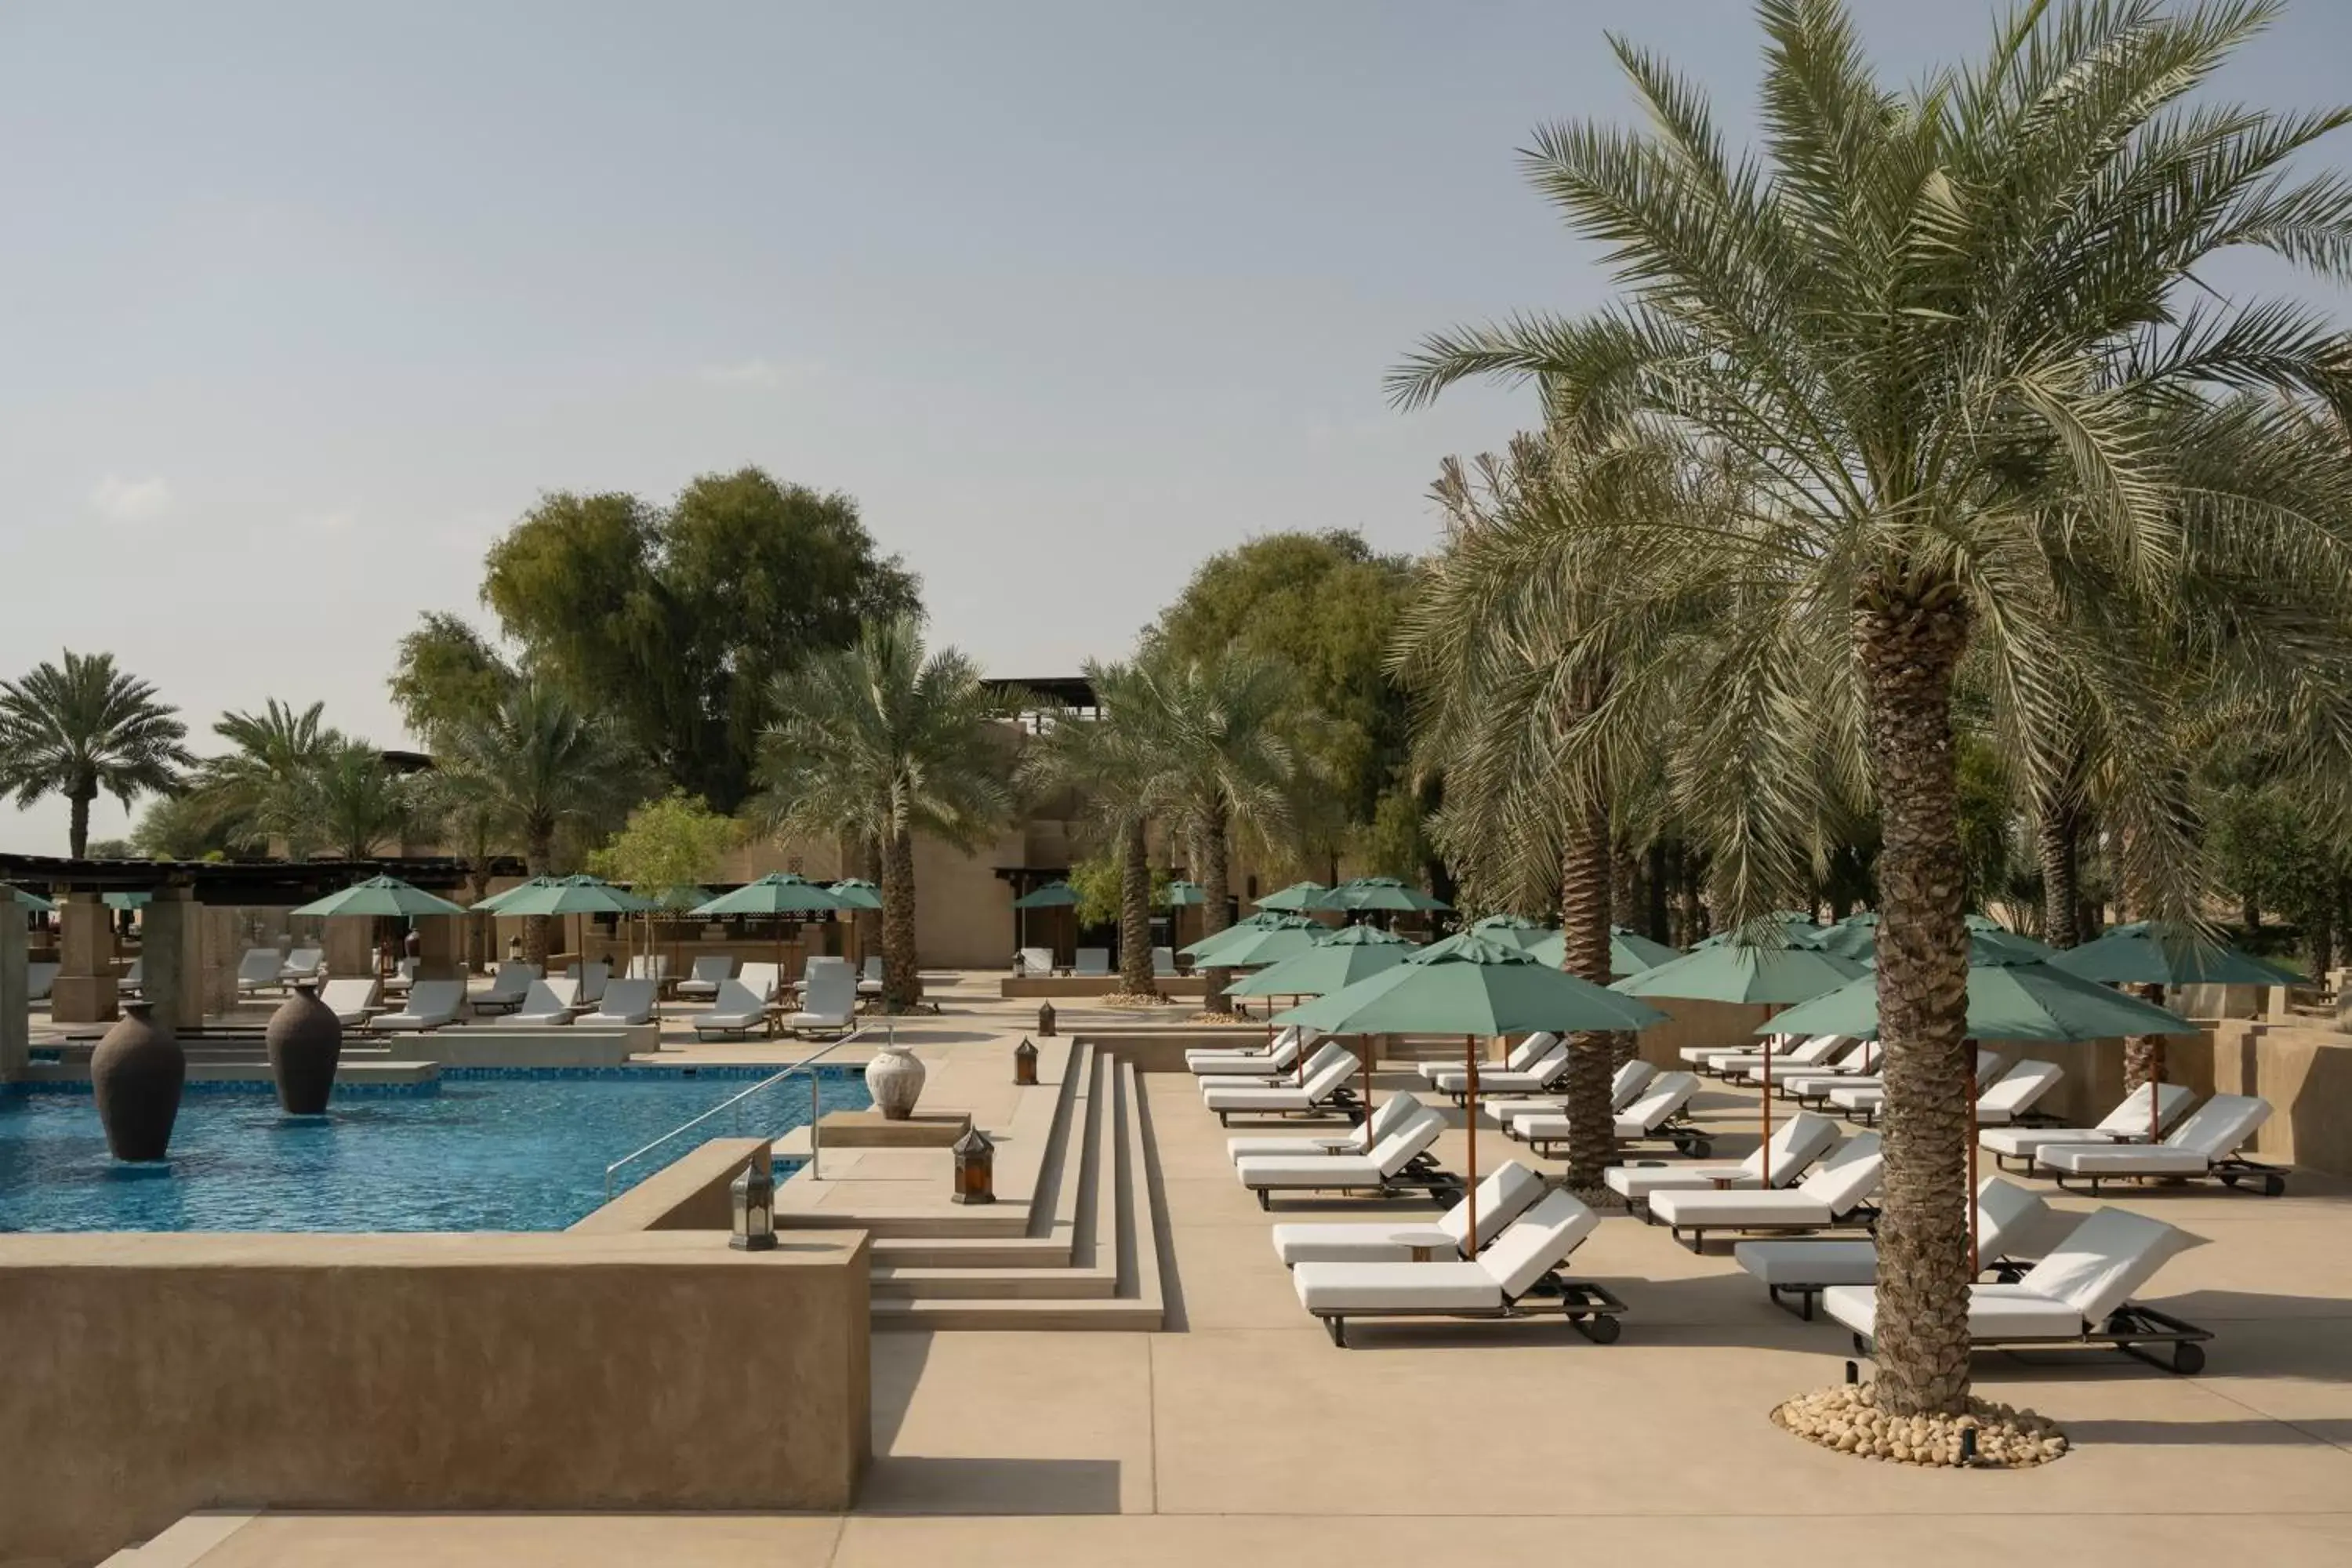 Swimming Pool in Bab Al Shams, A Rare Finds Desert Resort, Dubai